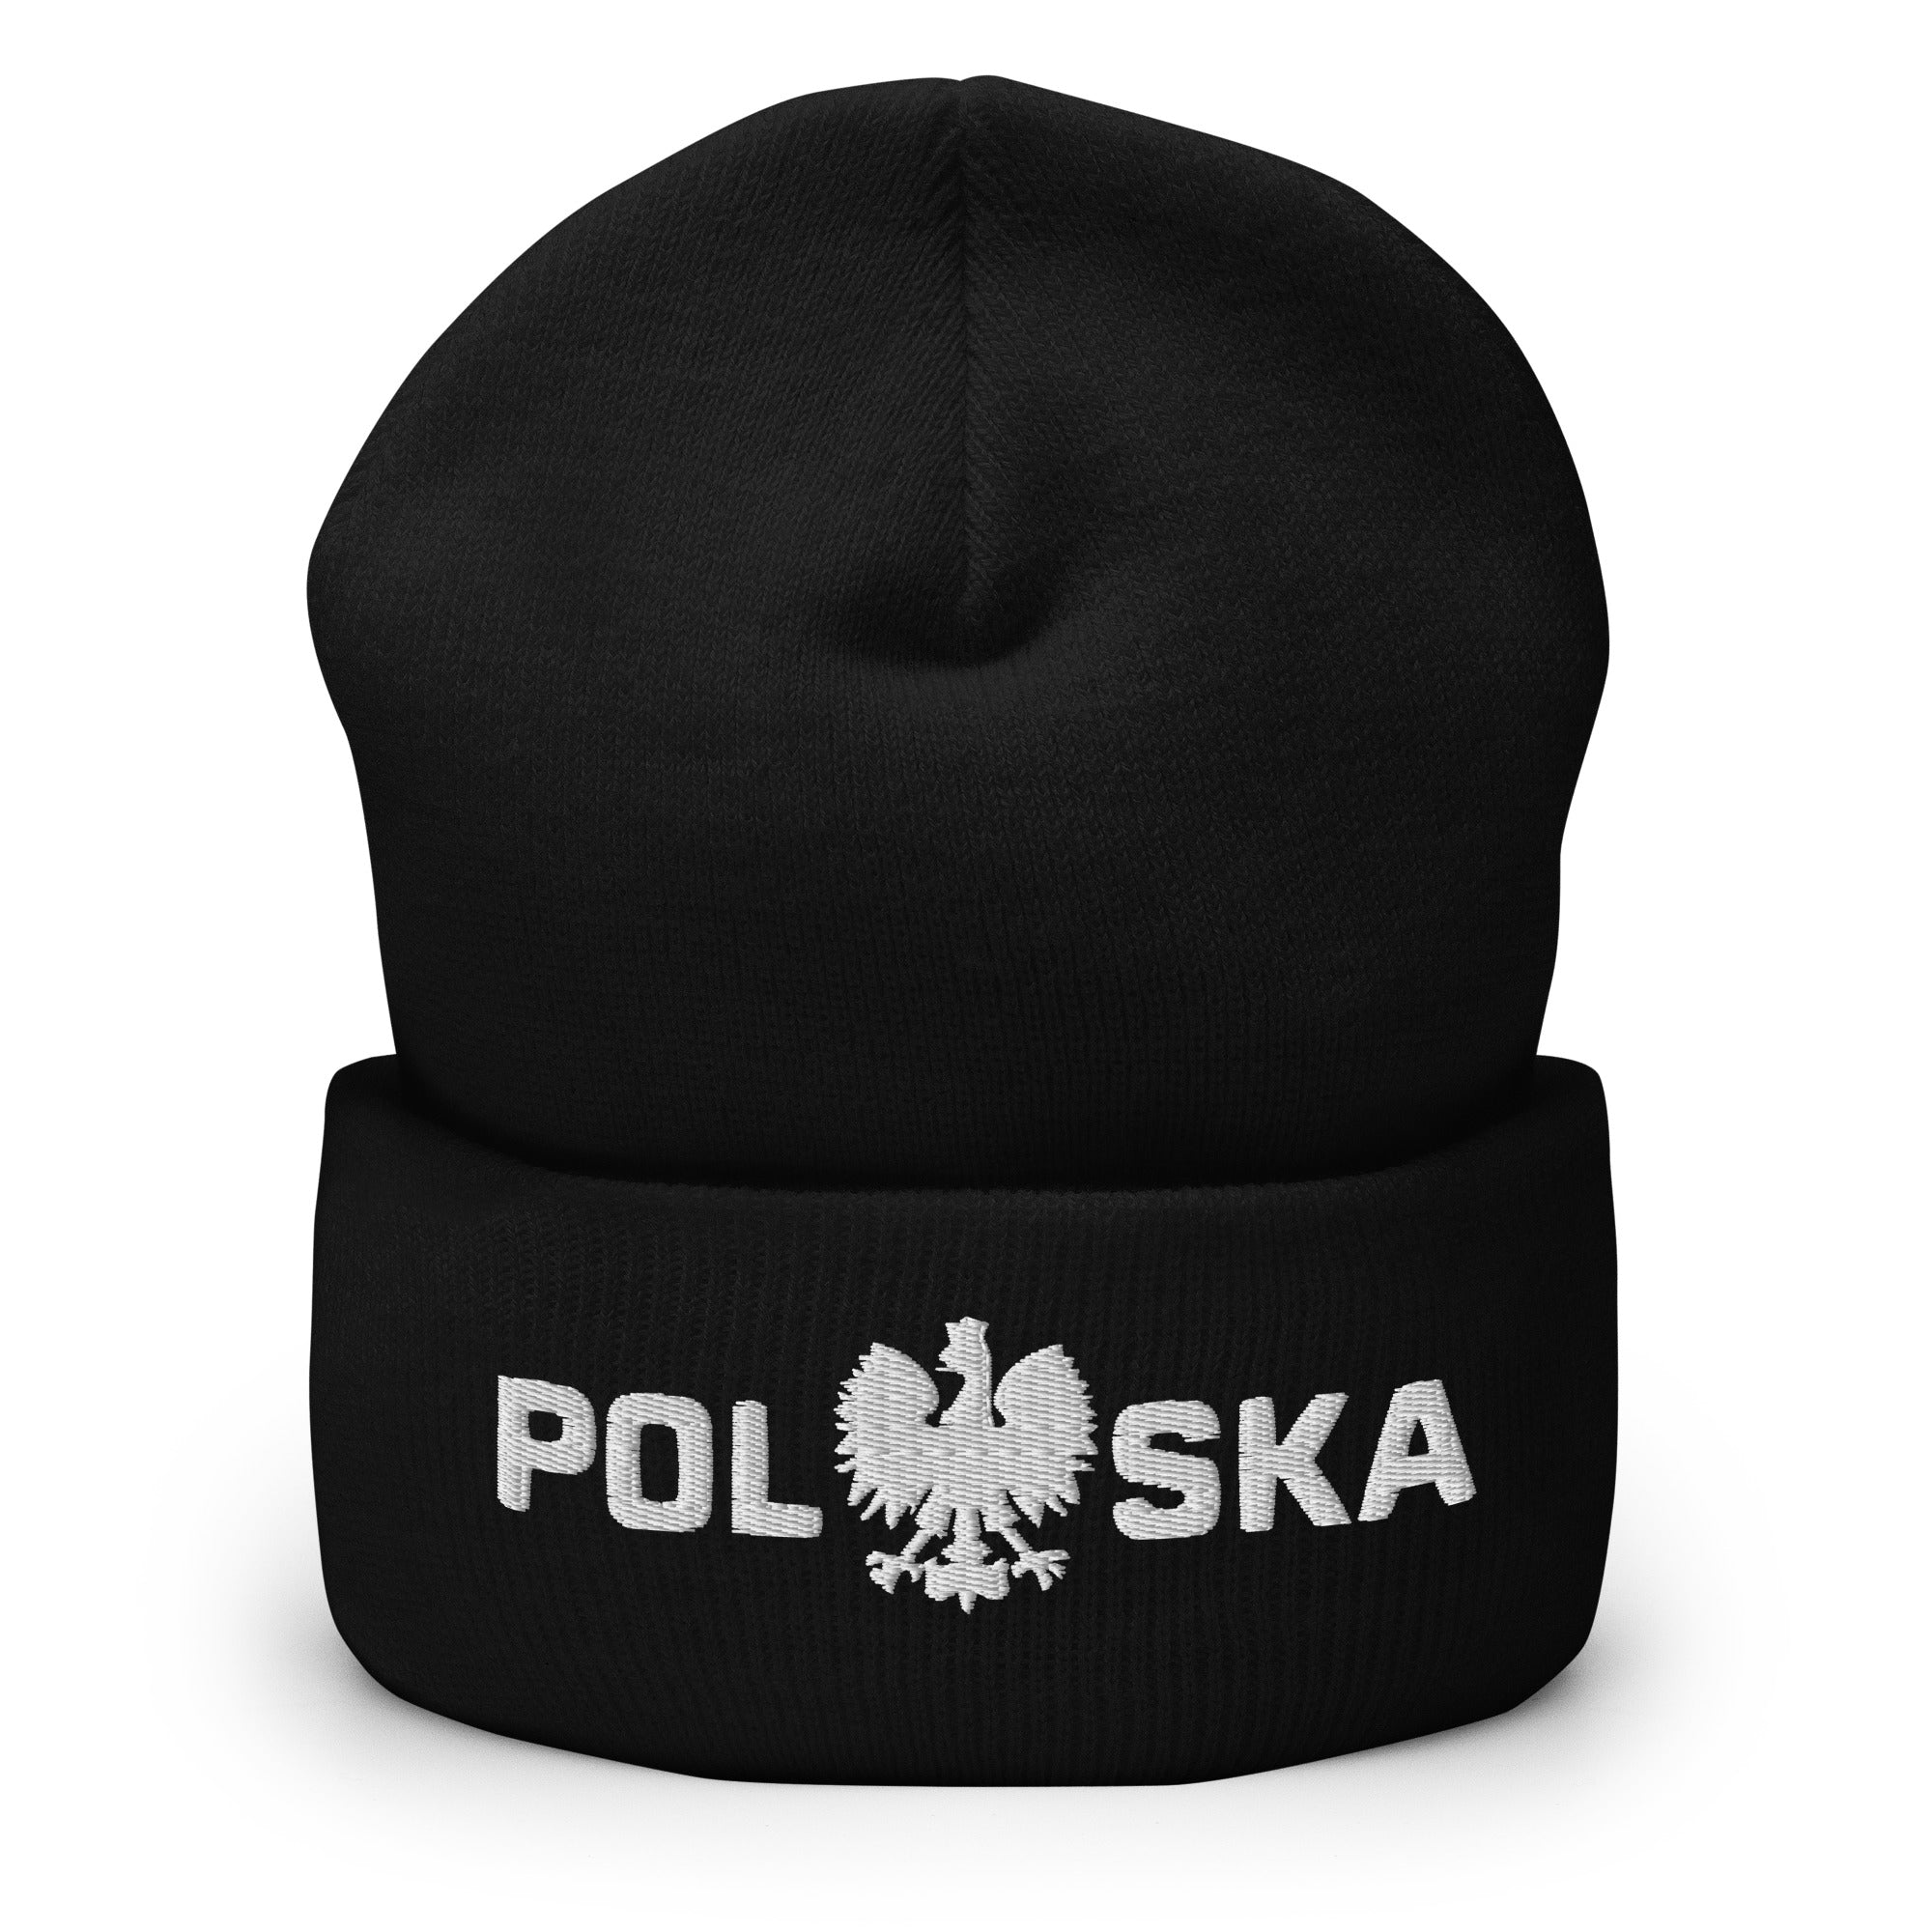 Polska Thick Lettering Cuffed Beanie  Polish Shirt Store Black  